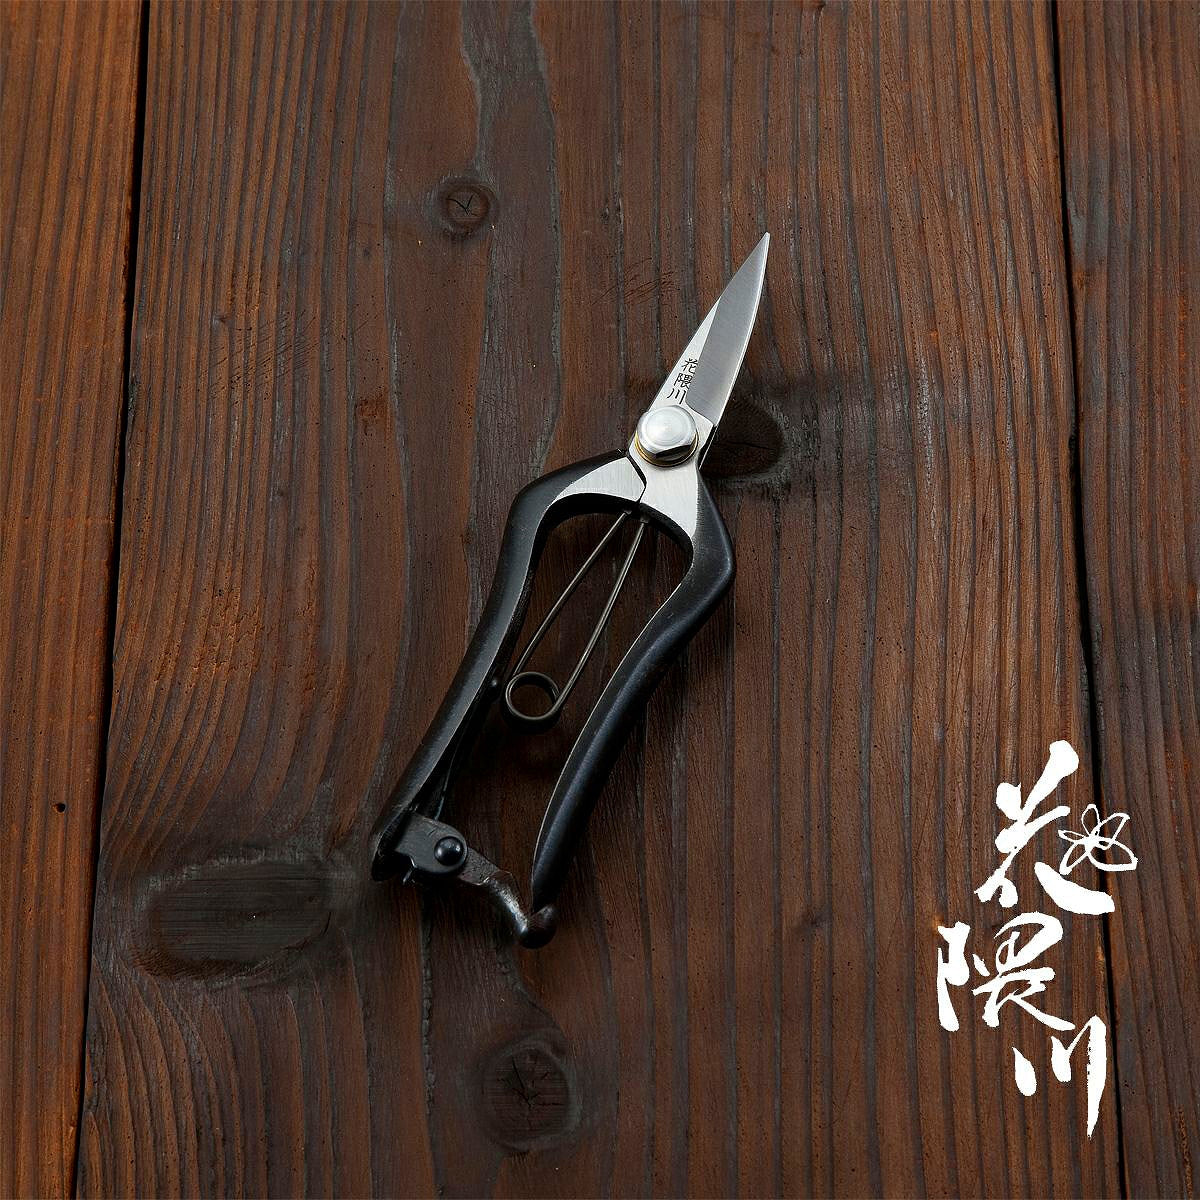 HONMAMON “HANAKUMAGAWA” Small Bud-Cutting Shears 170mm(abt 6.7") for Bonsai, Pruning, Single Bevel, Made in Japan